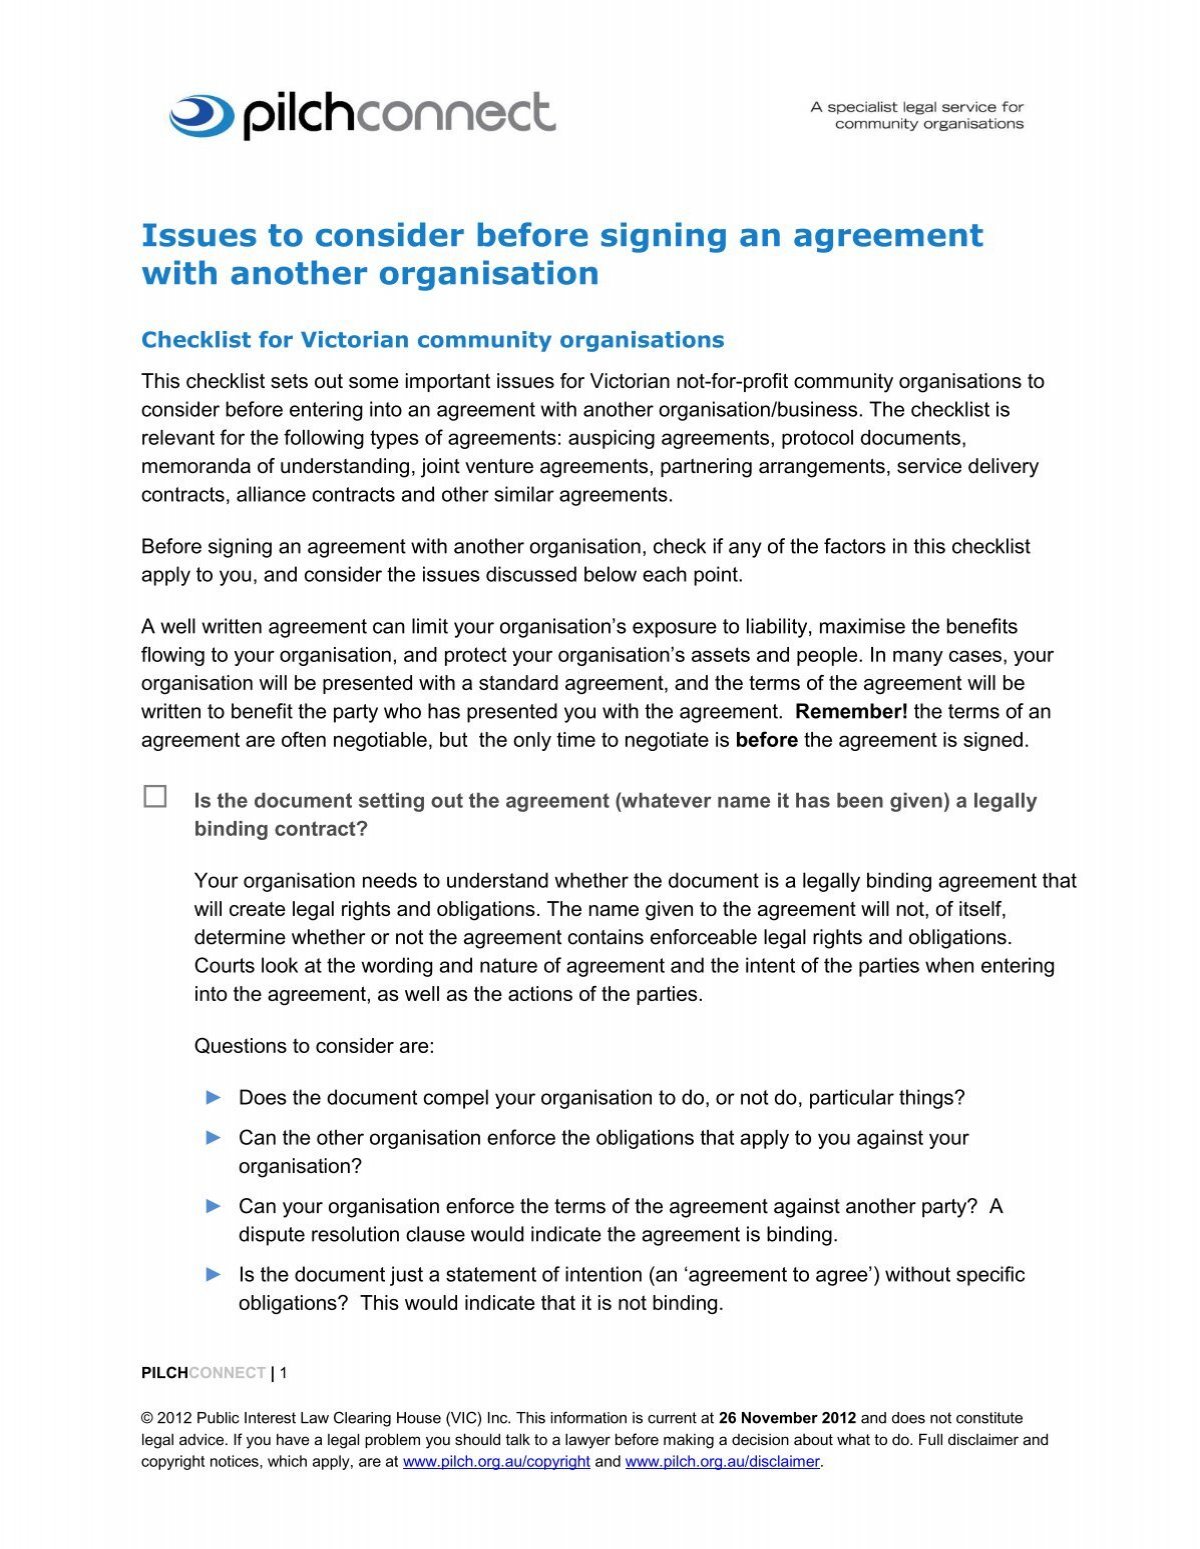 Legally binding contract vs. non-binding agreement